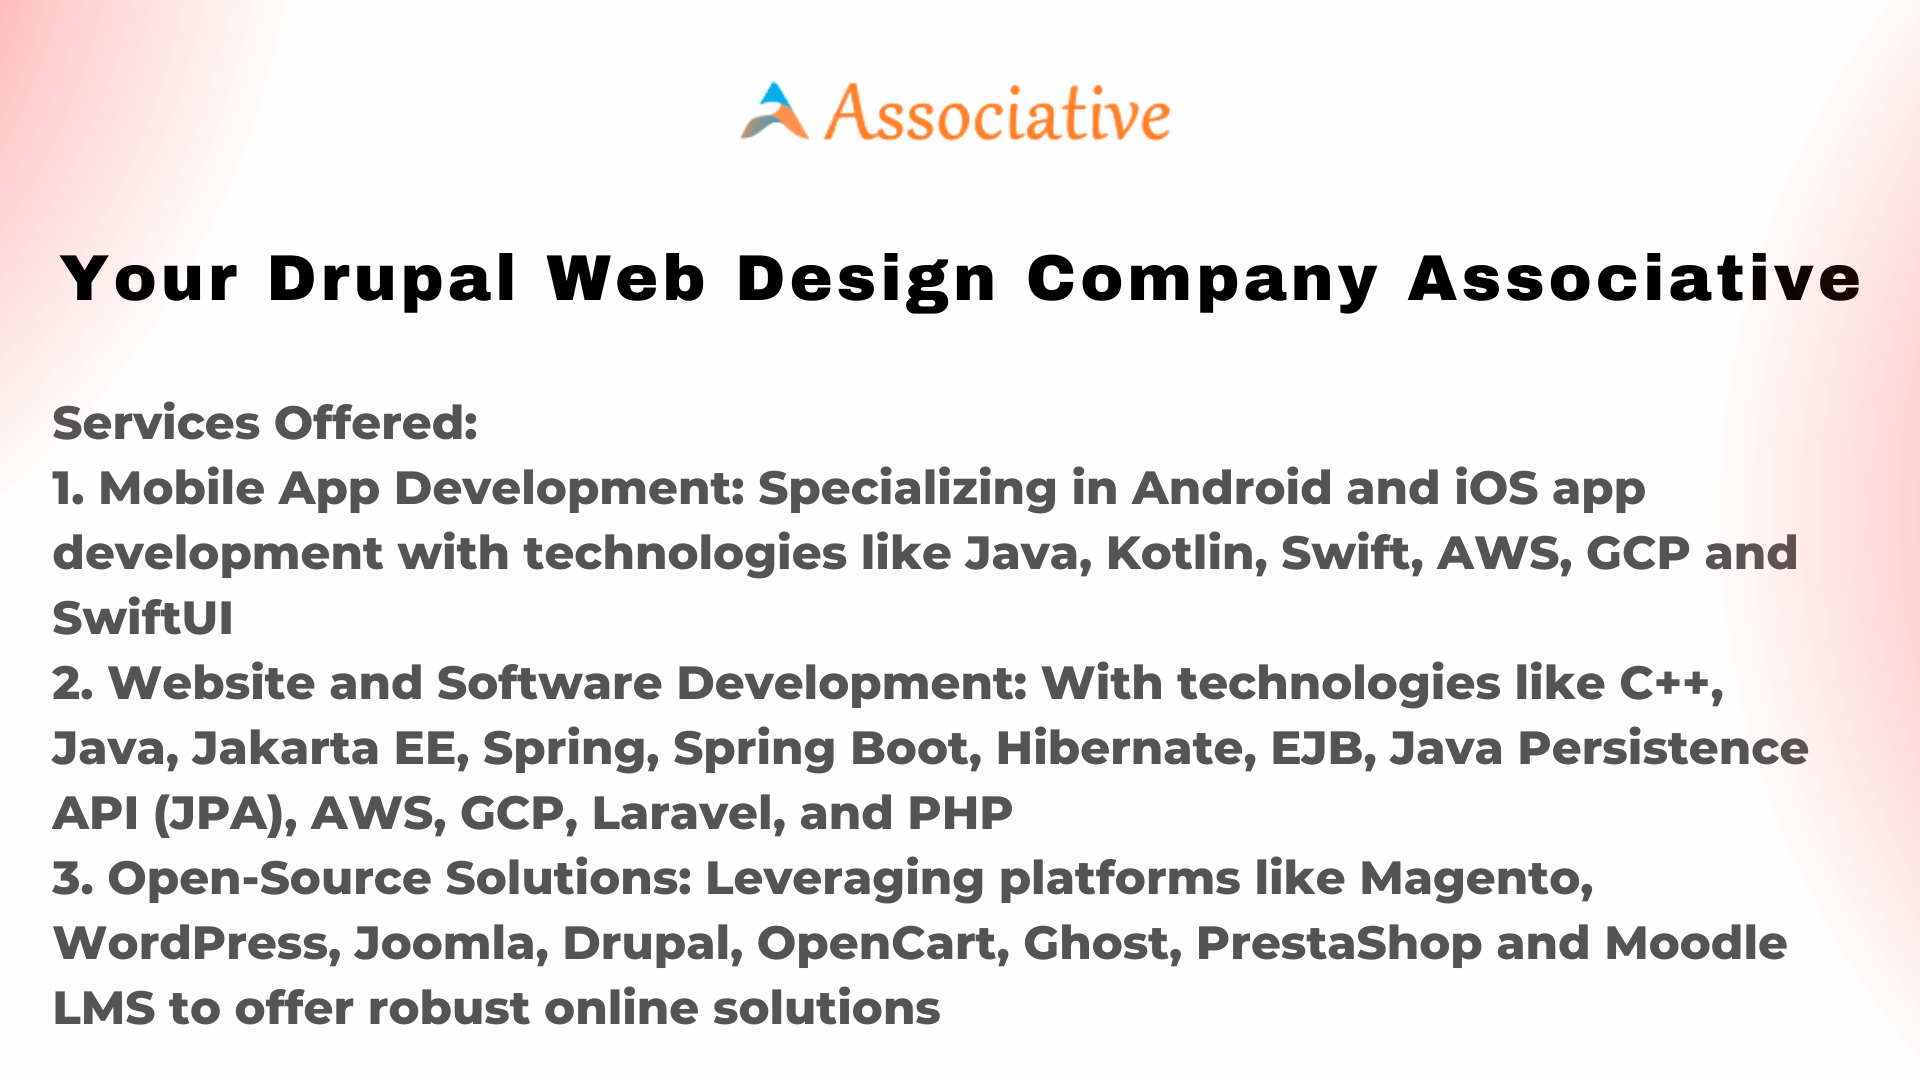 Your Drupal Web Design Company Associative